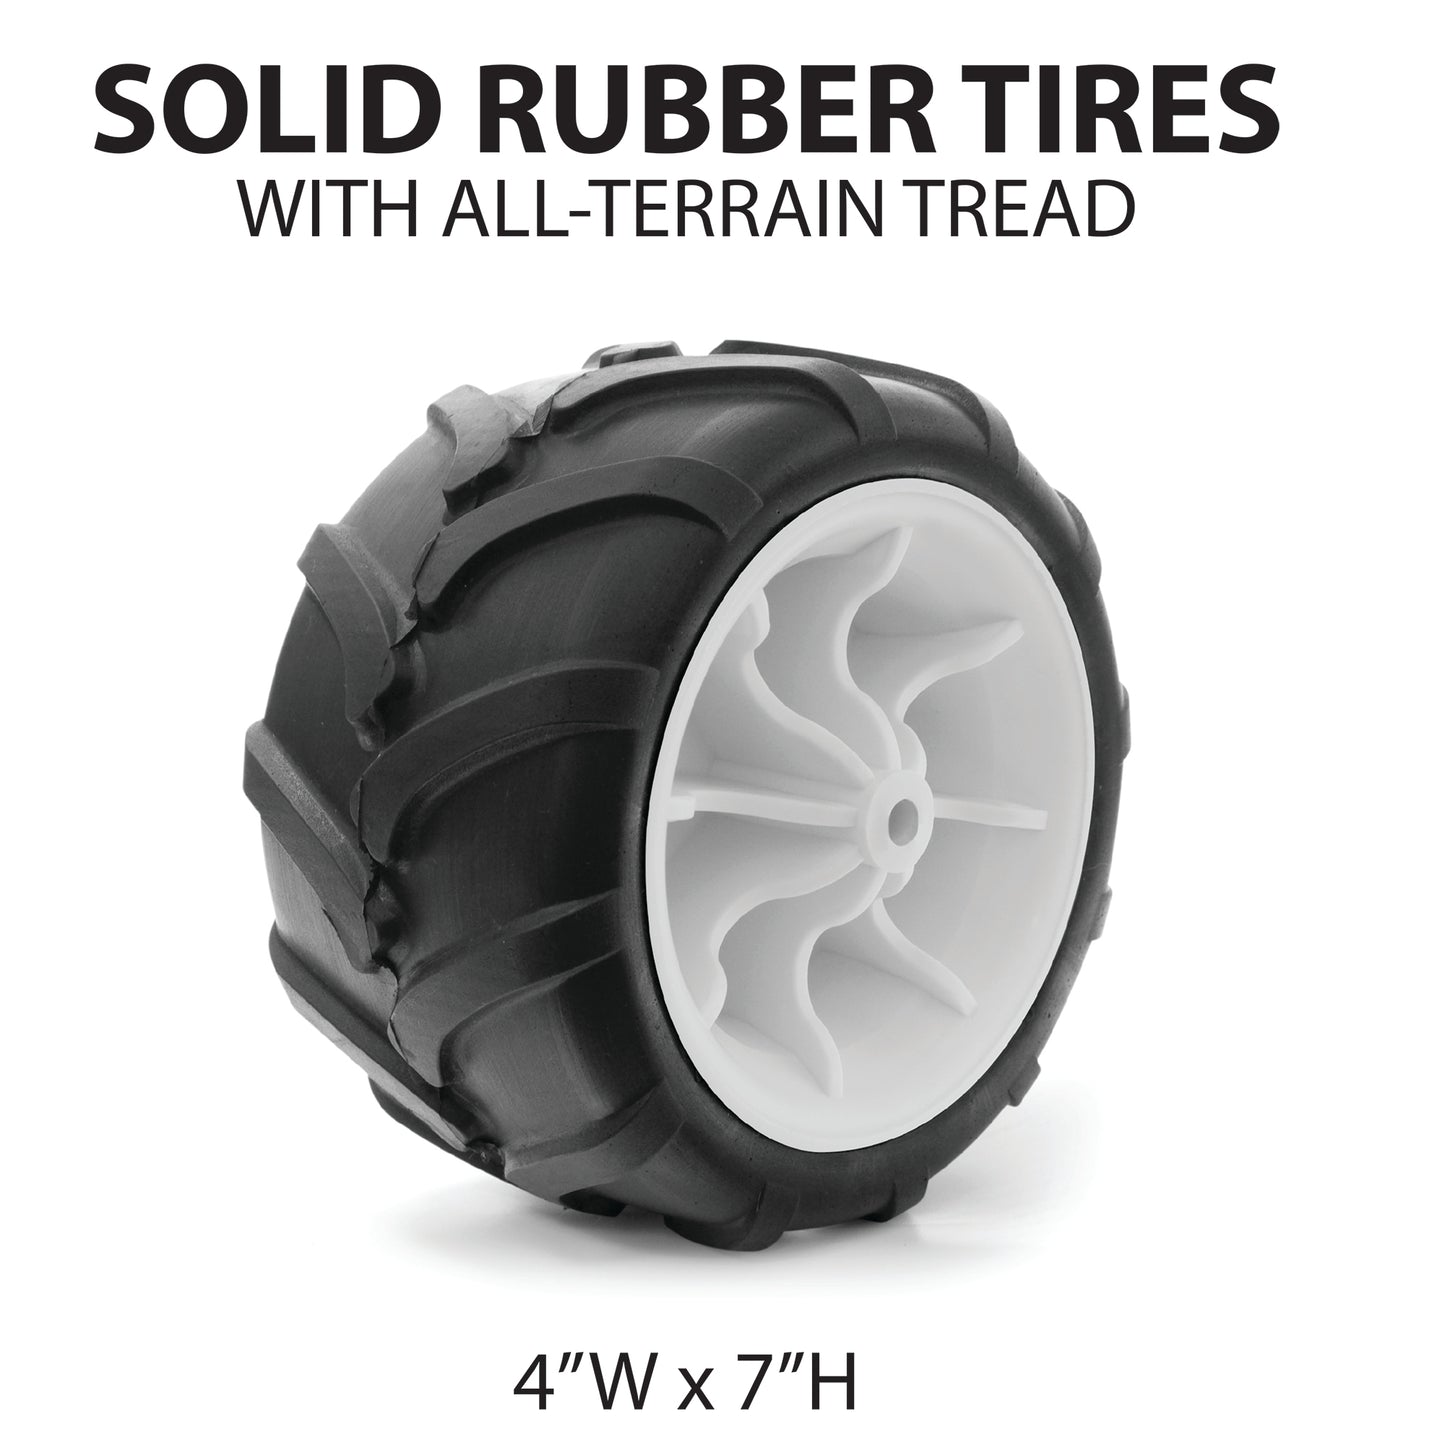 All-Terrain Rubber Wagon Wheels